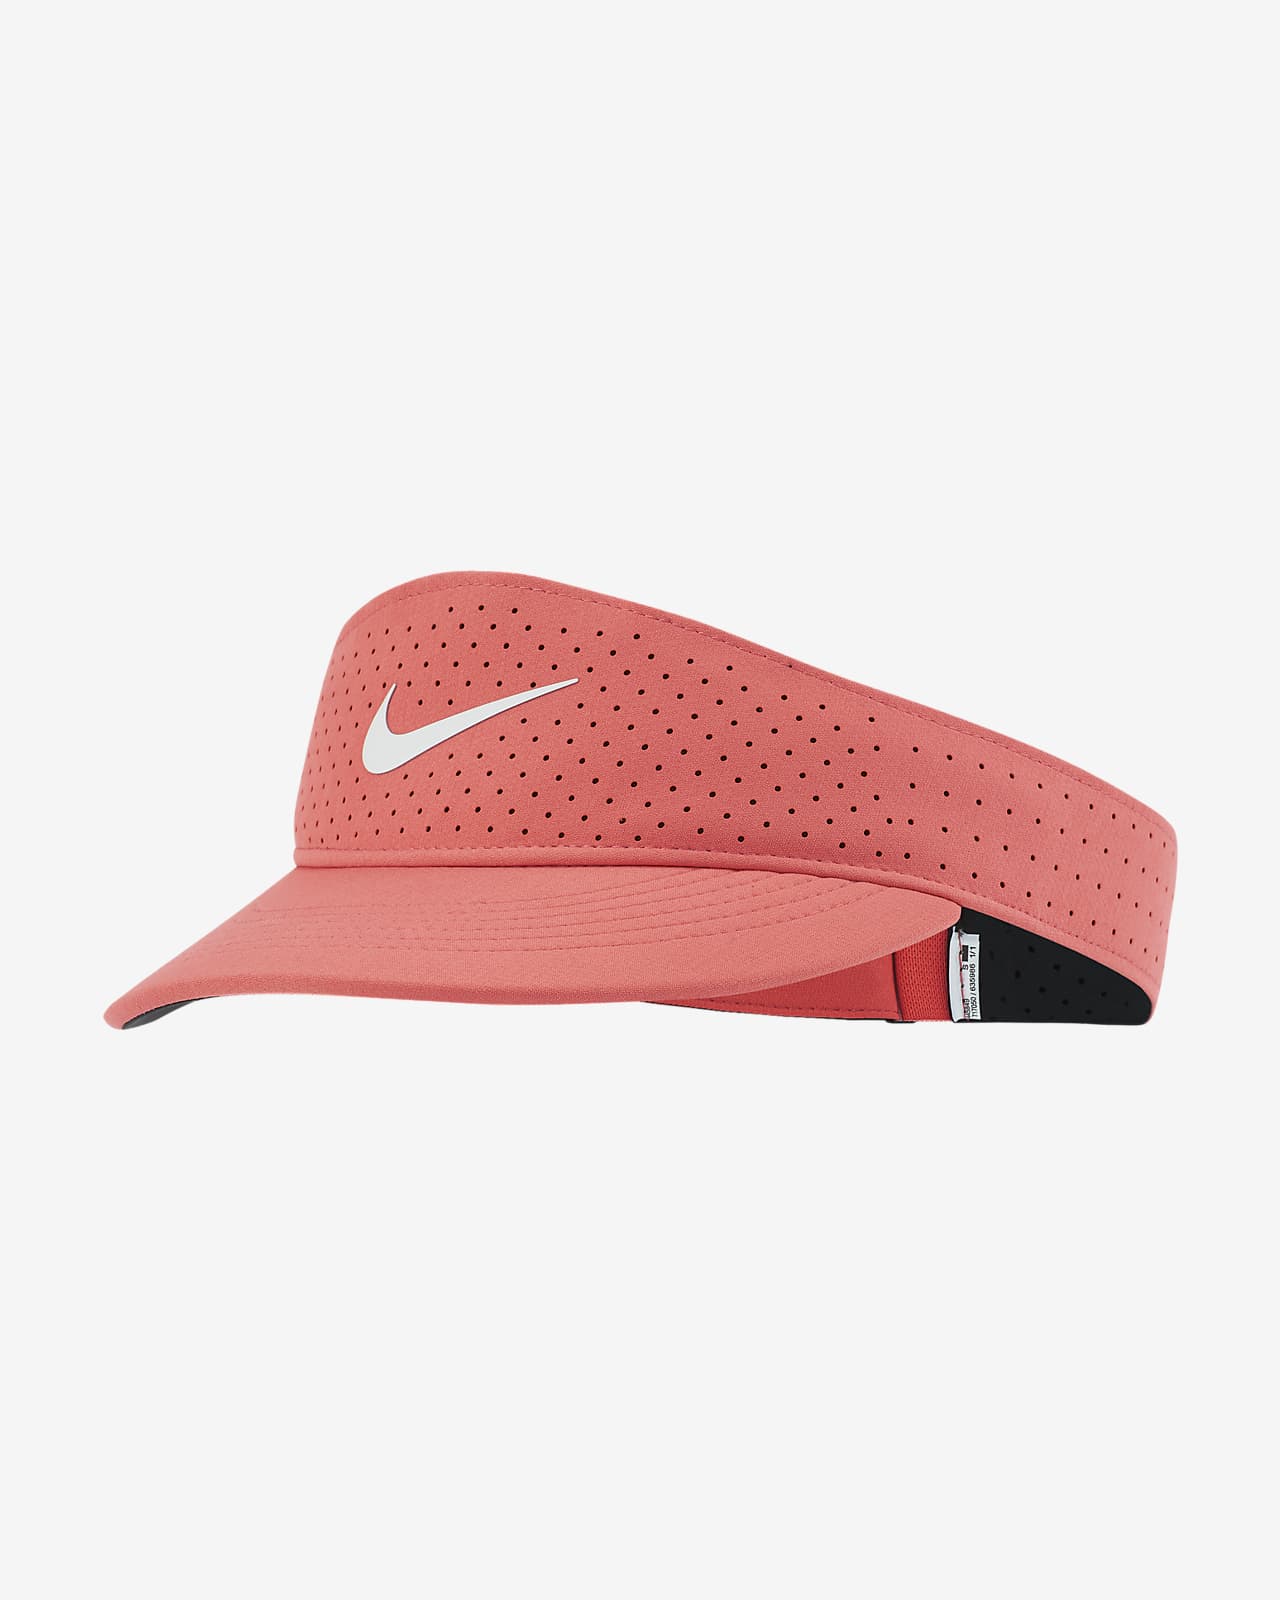 NikeCourt Advantage 女款網球遮陽帽